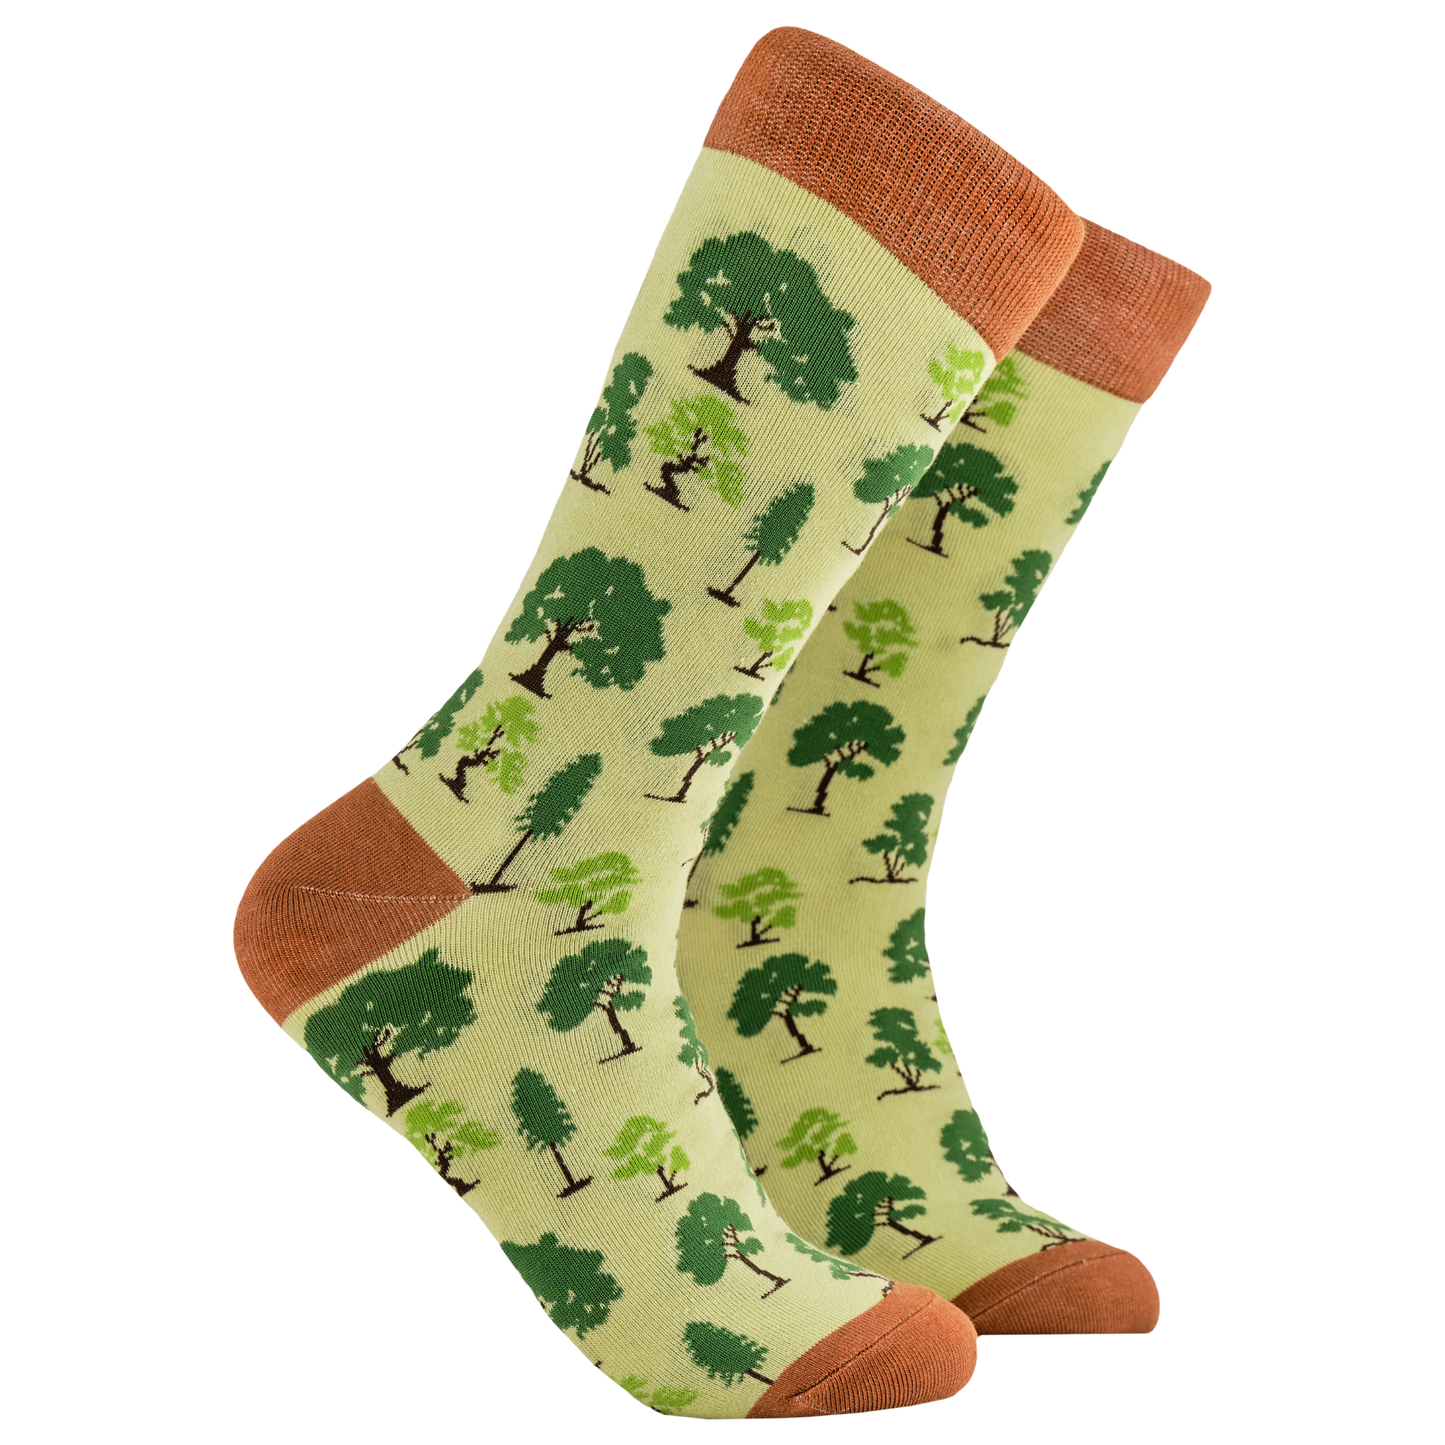 Tree Socks - You Wood Love. A pair of socks depicting British trees. Yellow legs, orange cuff, heel and toe.